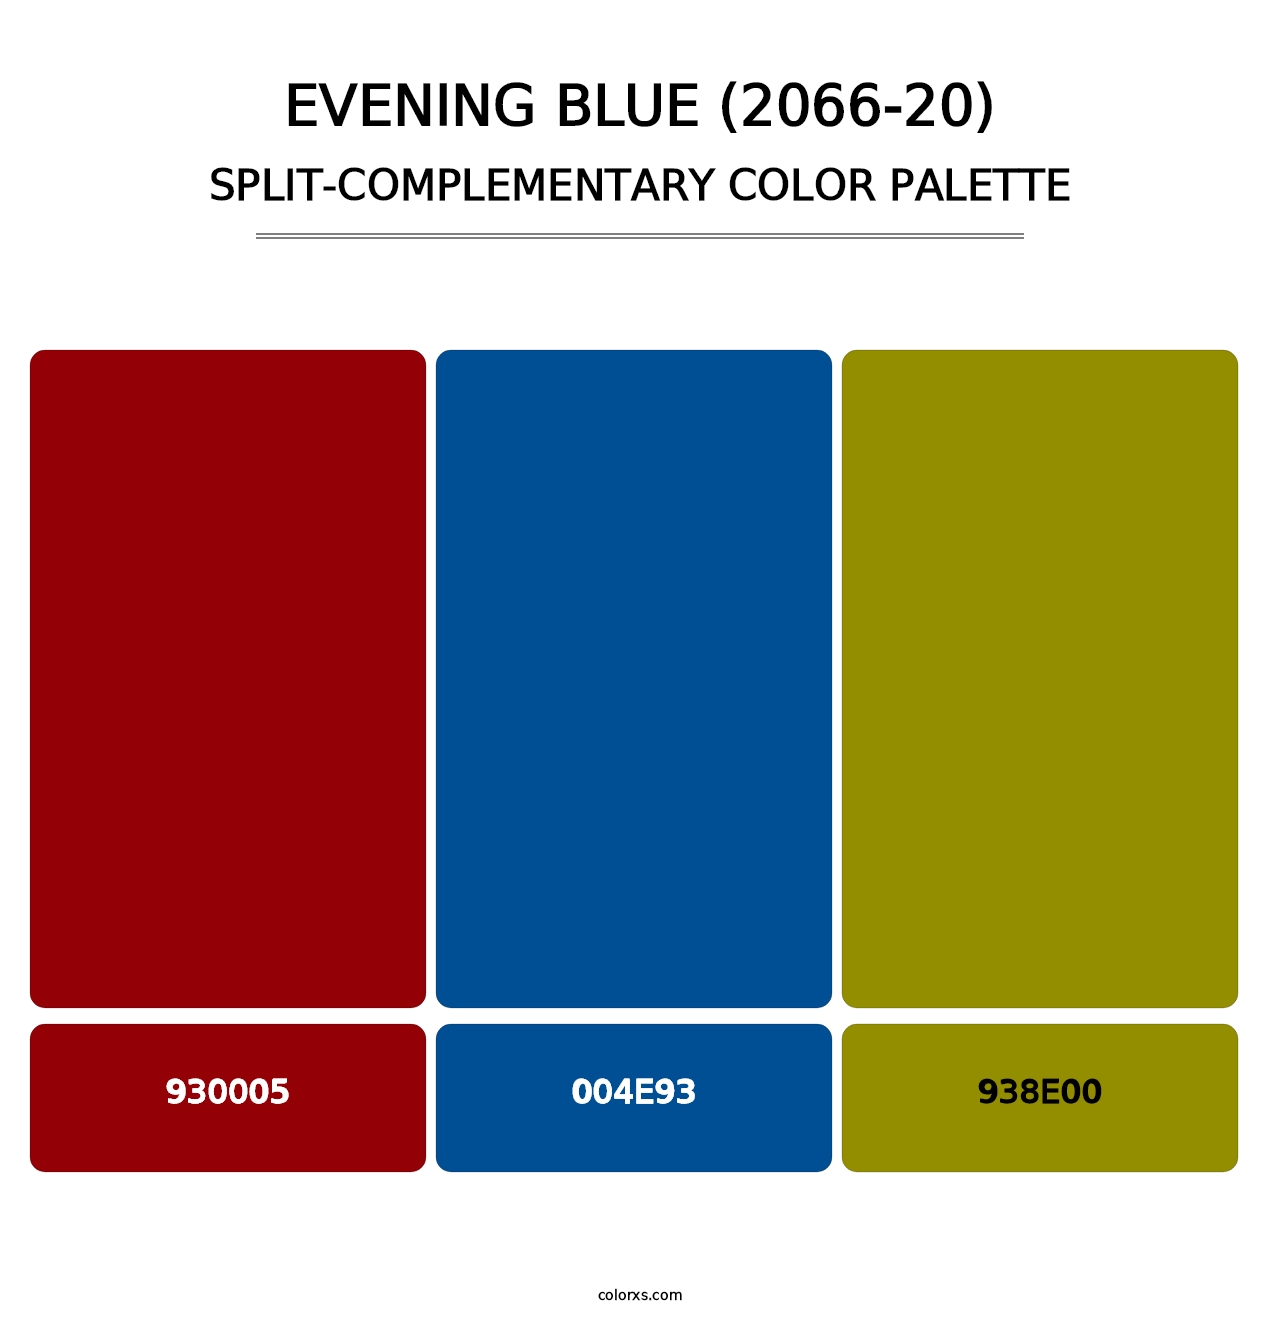 Evening Blue (2066-20) - Split-Complementary Color Palette